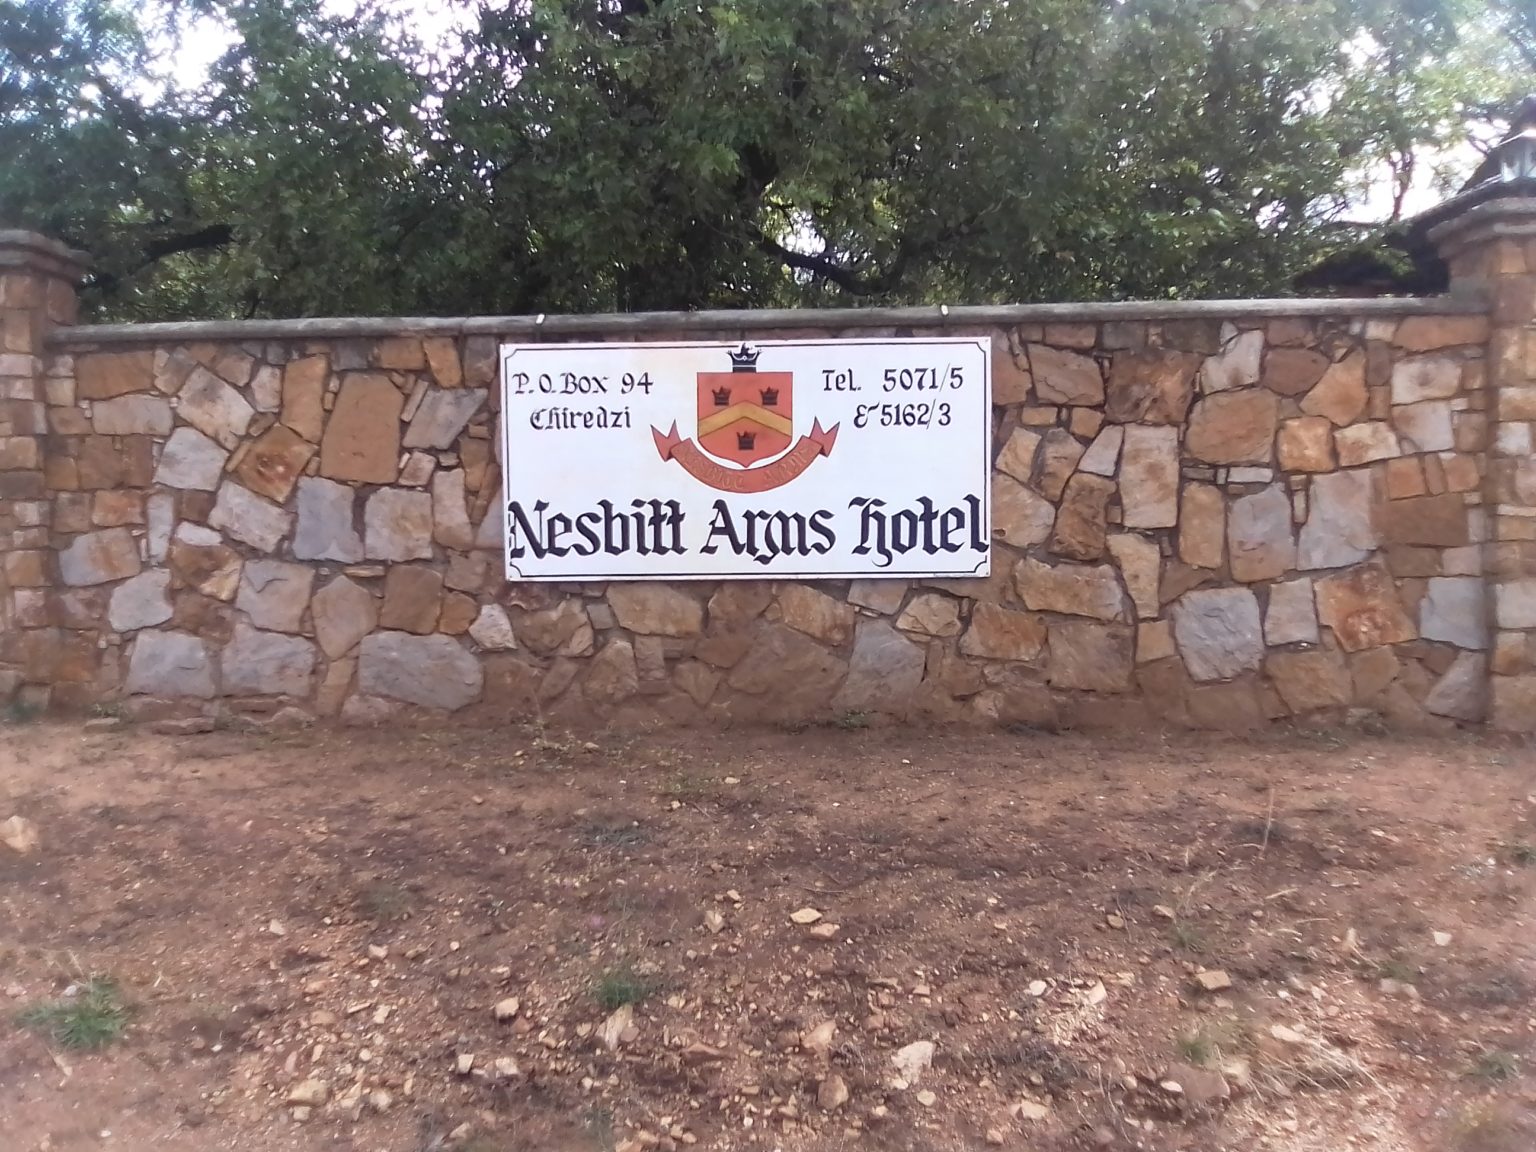 Nesbitt Arms hotel sold - Lowveld Checkpoint